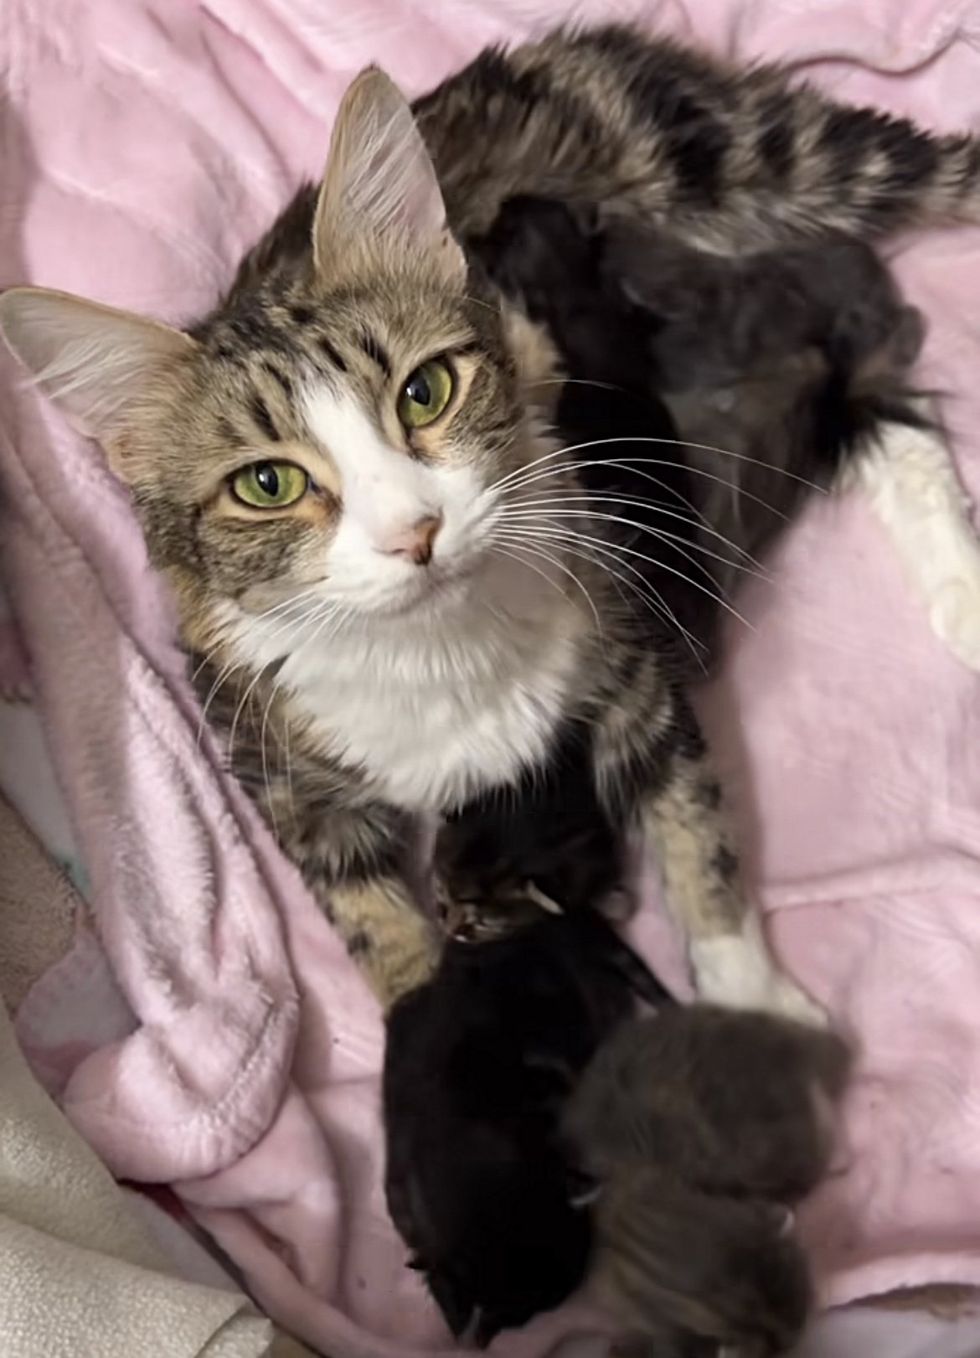 smiley cat nursing kittens